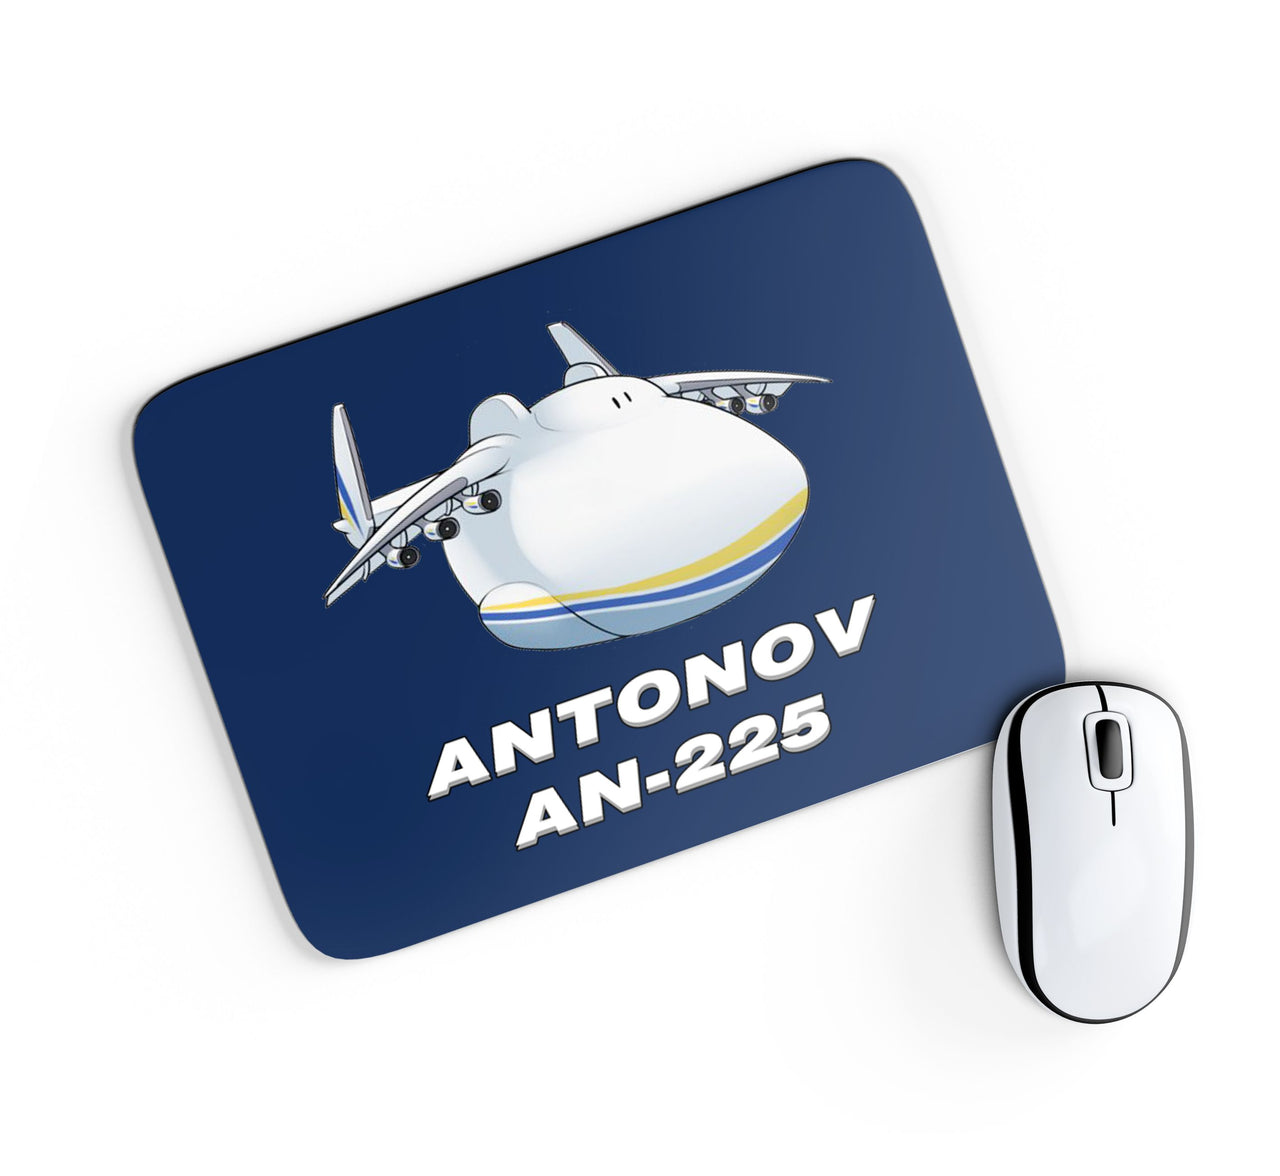 Antonov AN-225 (21) Designed Mouse Pads